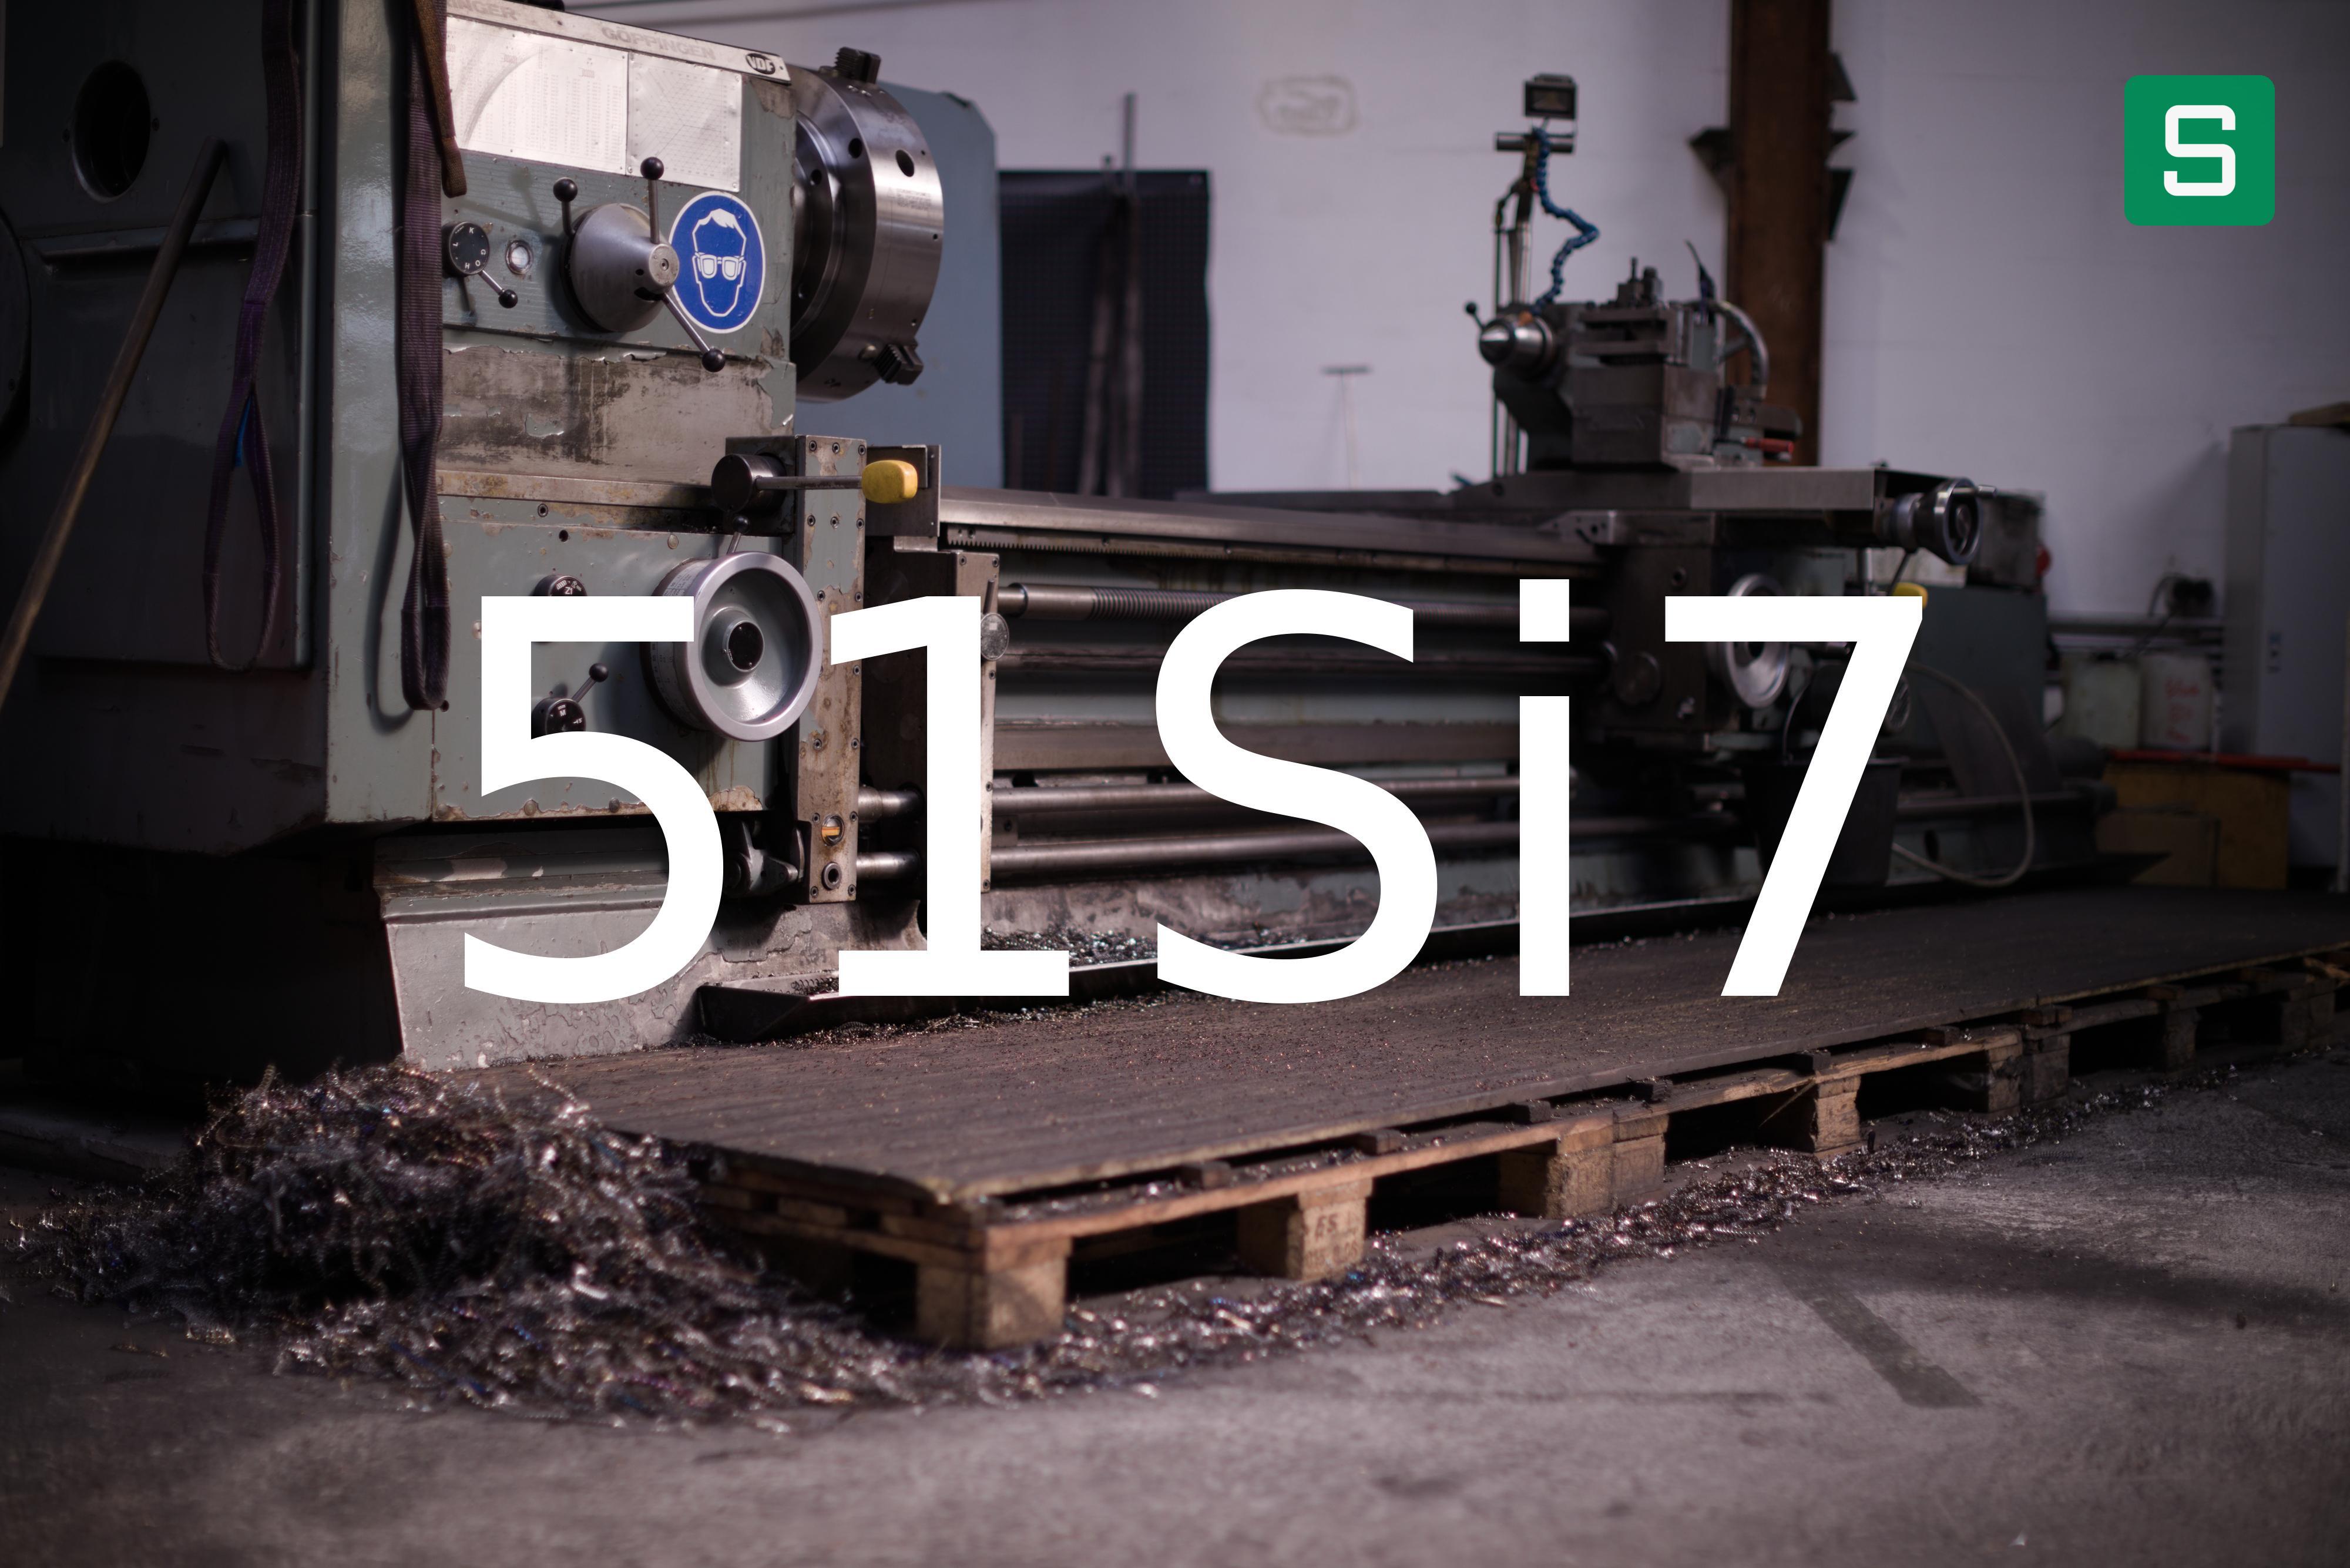 Steel Material: 51Si7